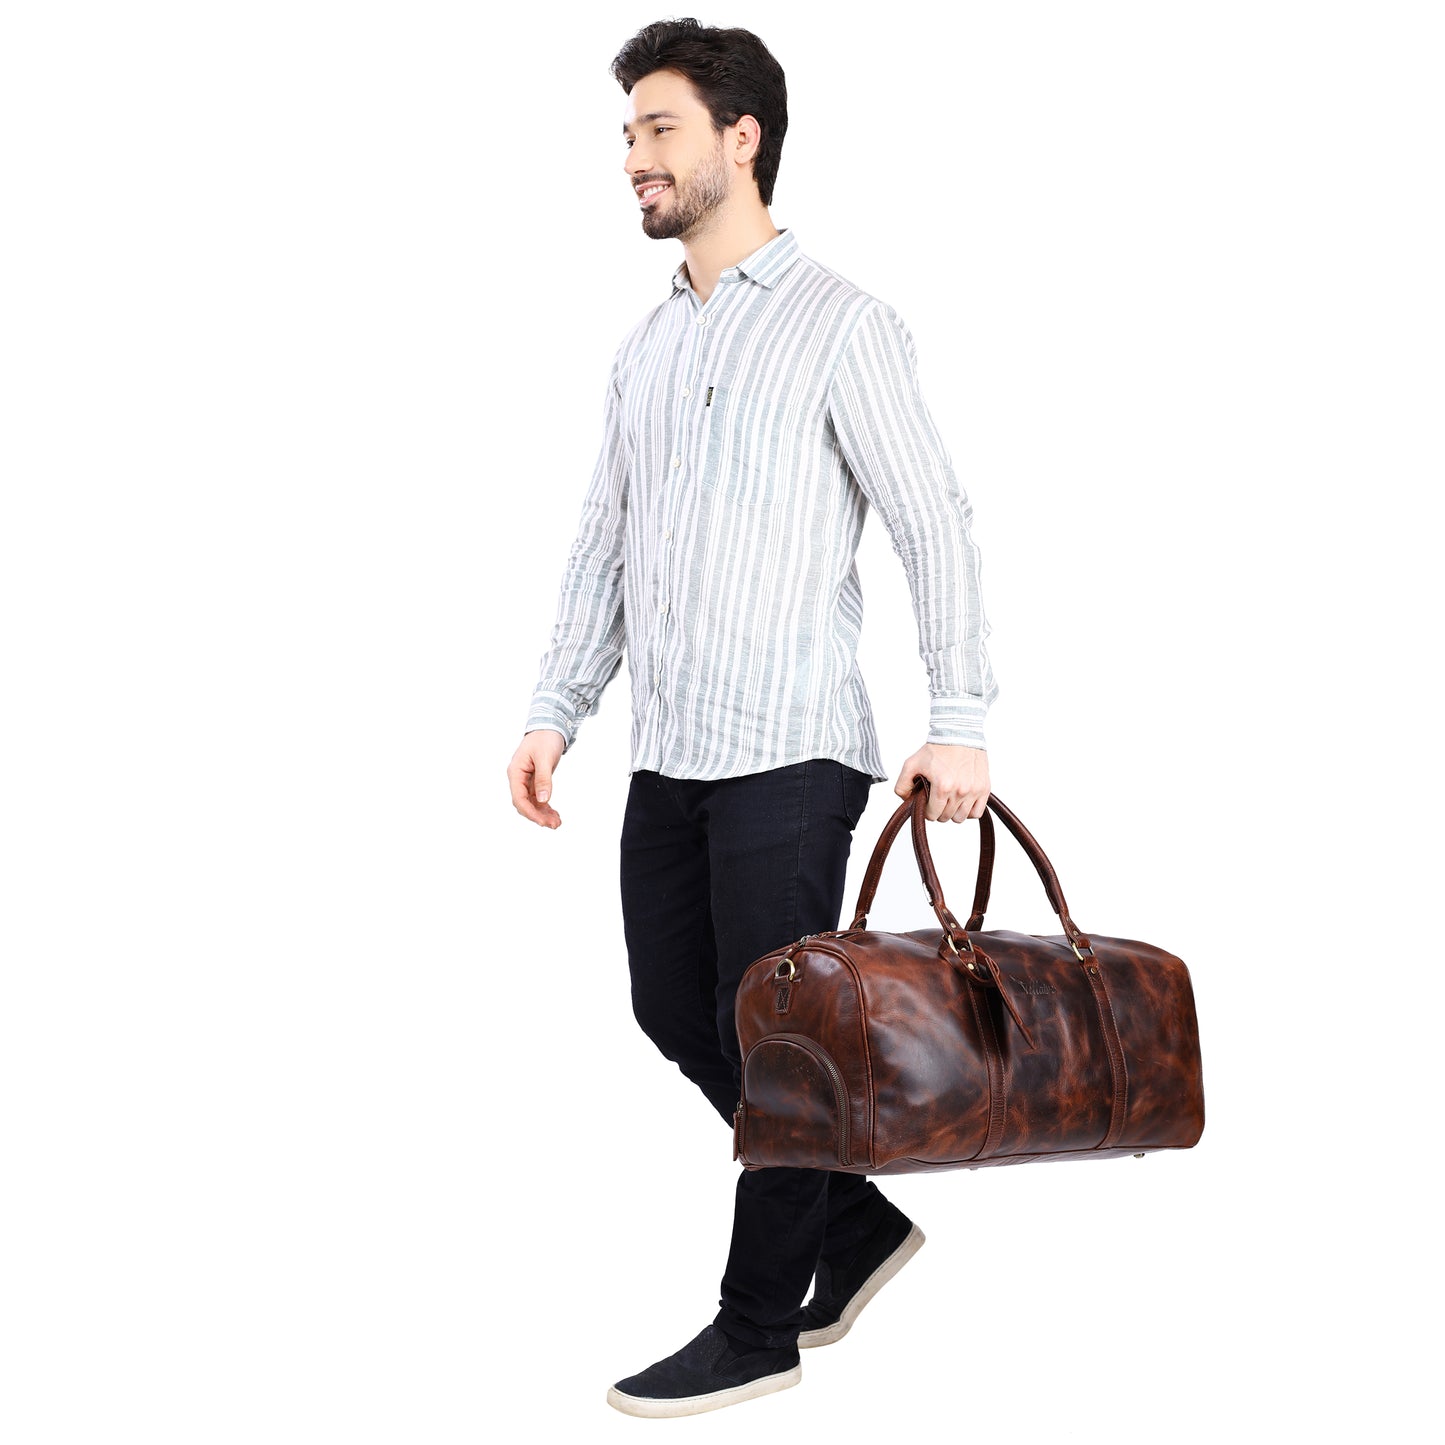 Personalized Leather Duffle Bag - XLarge